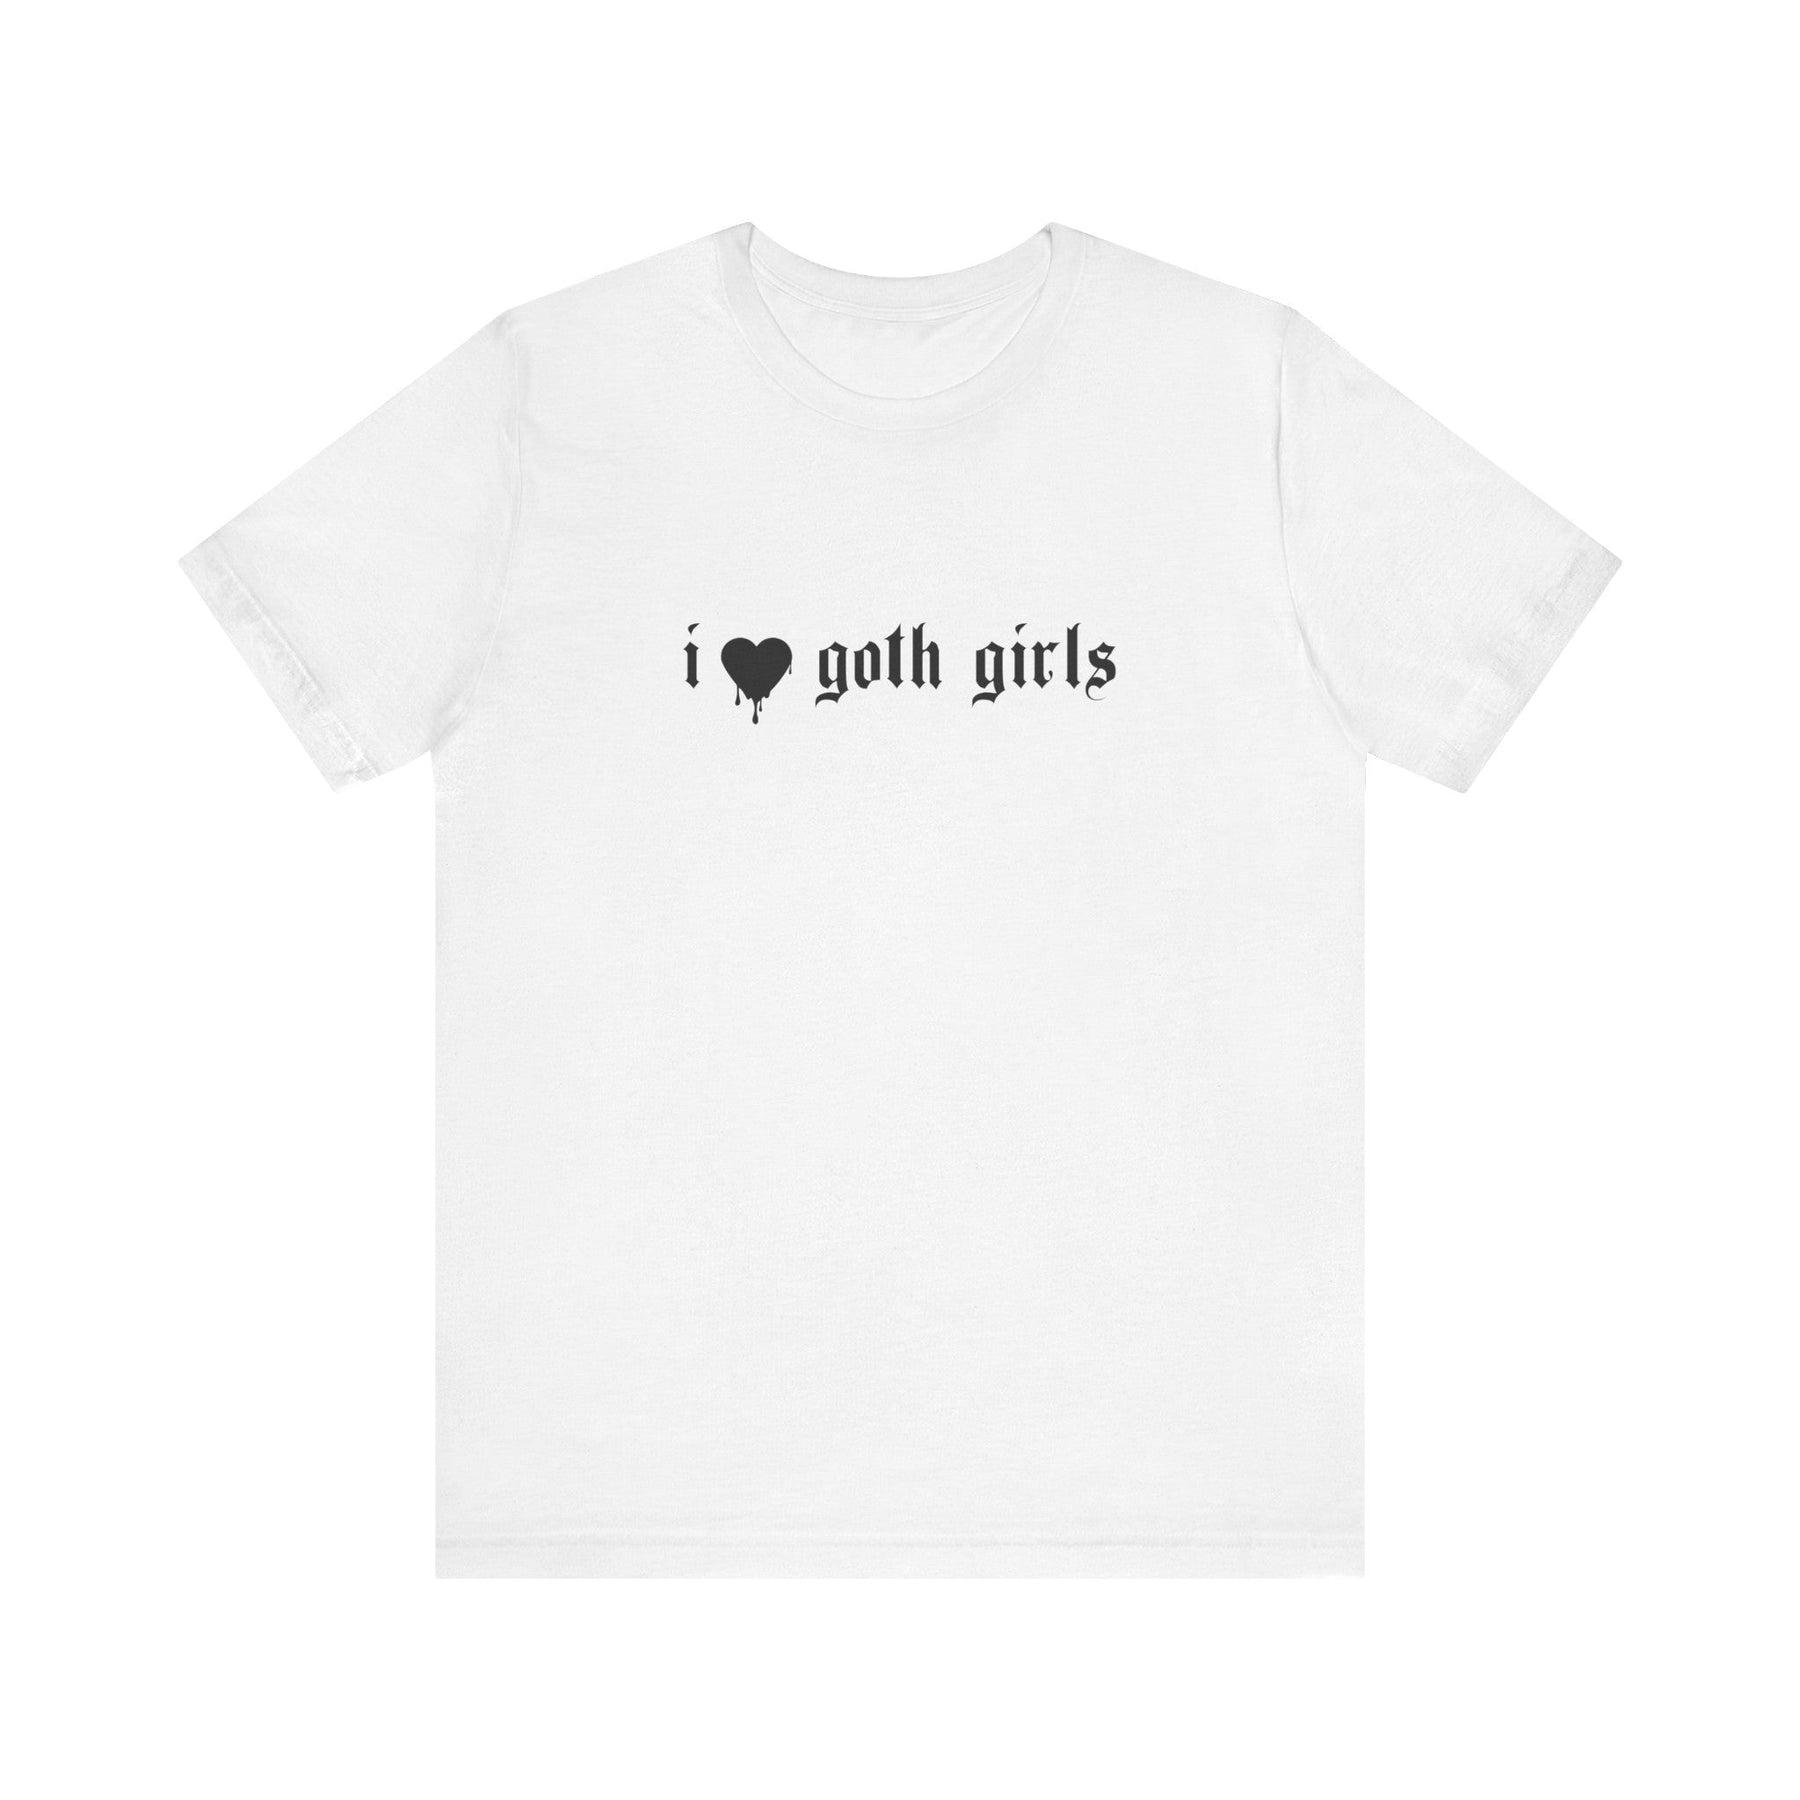 I Love Goth Girls T - Shirt - Goth Cloth Co.T - Shirt10371385507930599388